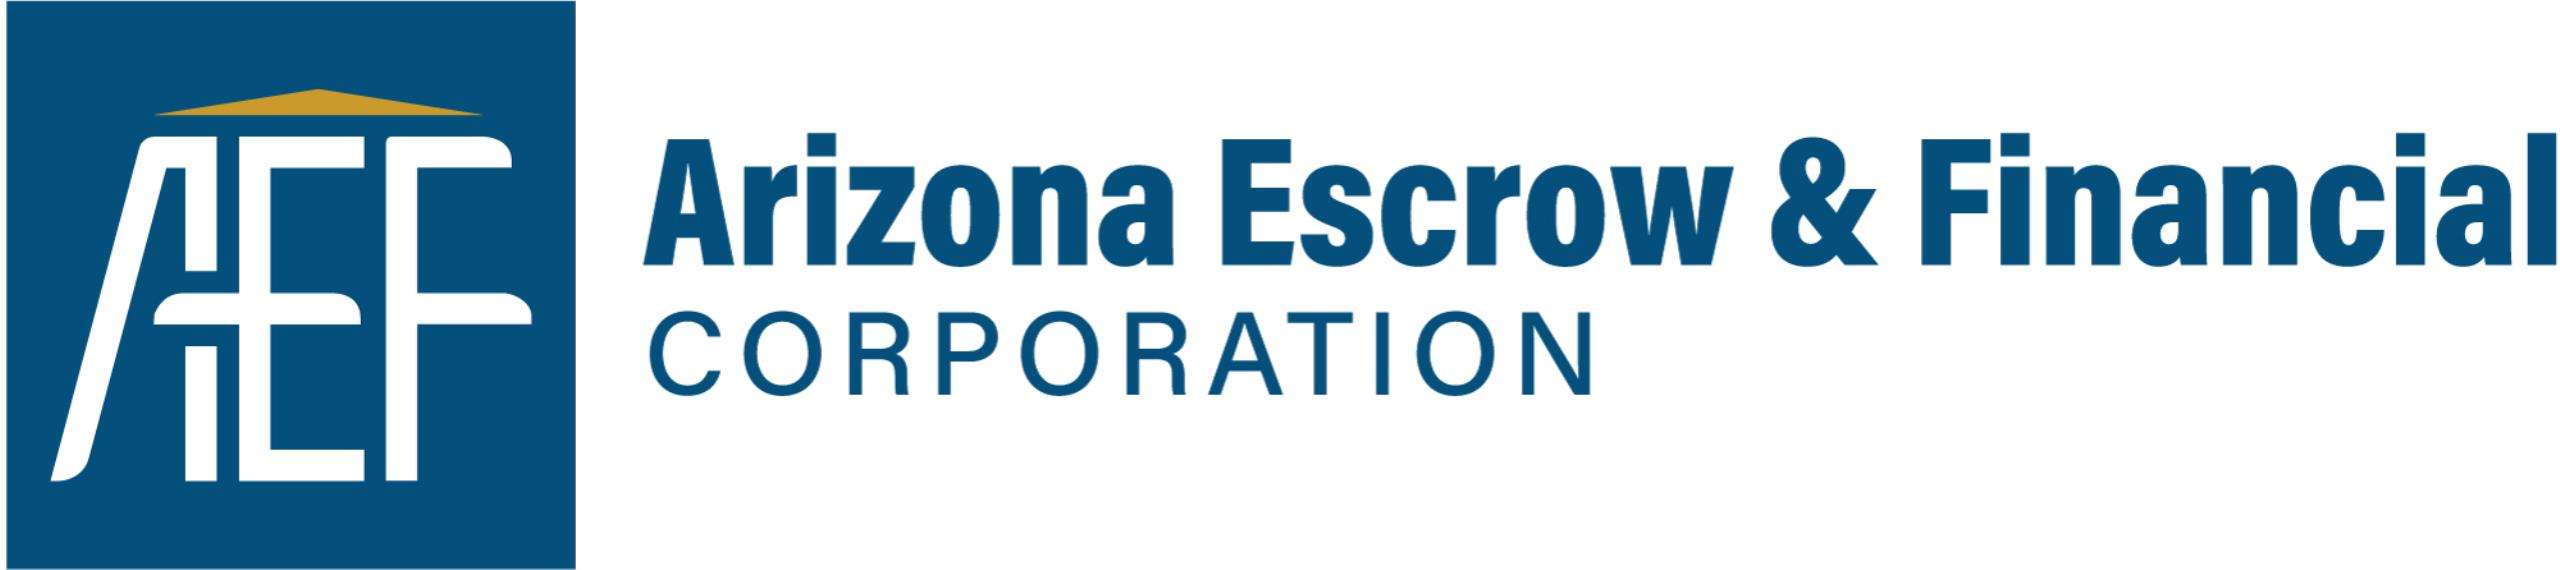 Arizona Escrow & Financial Corporation Logo